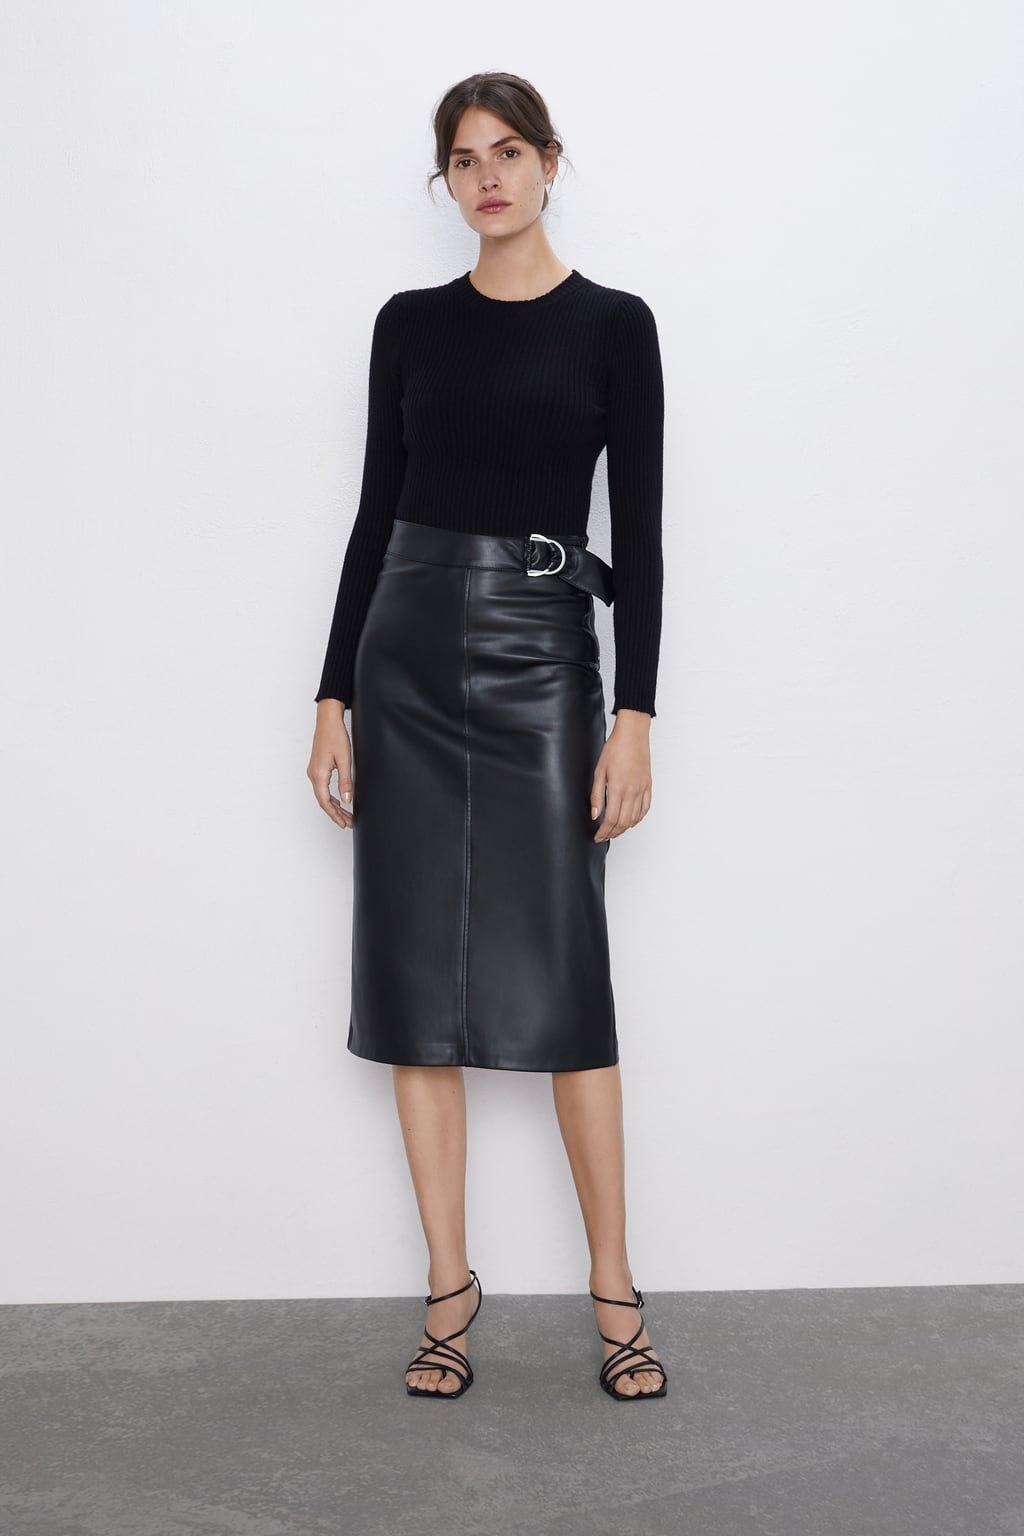 zara leather items 2019 fw jacket skirt shirts pants